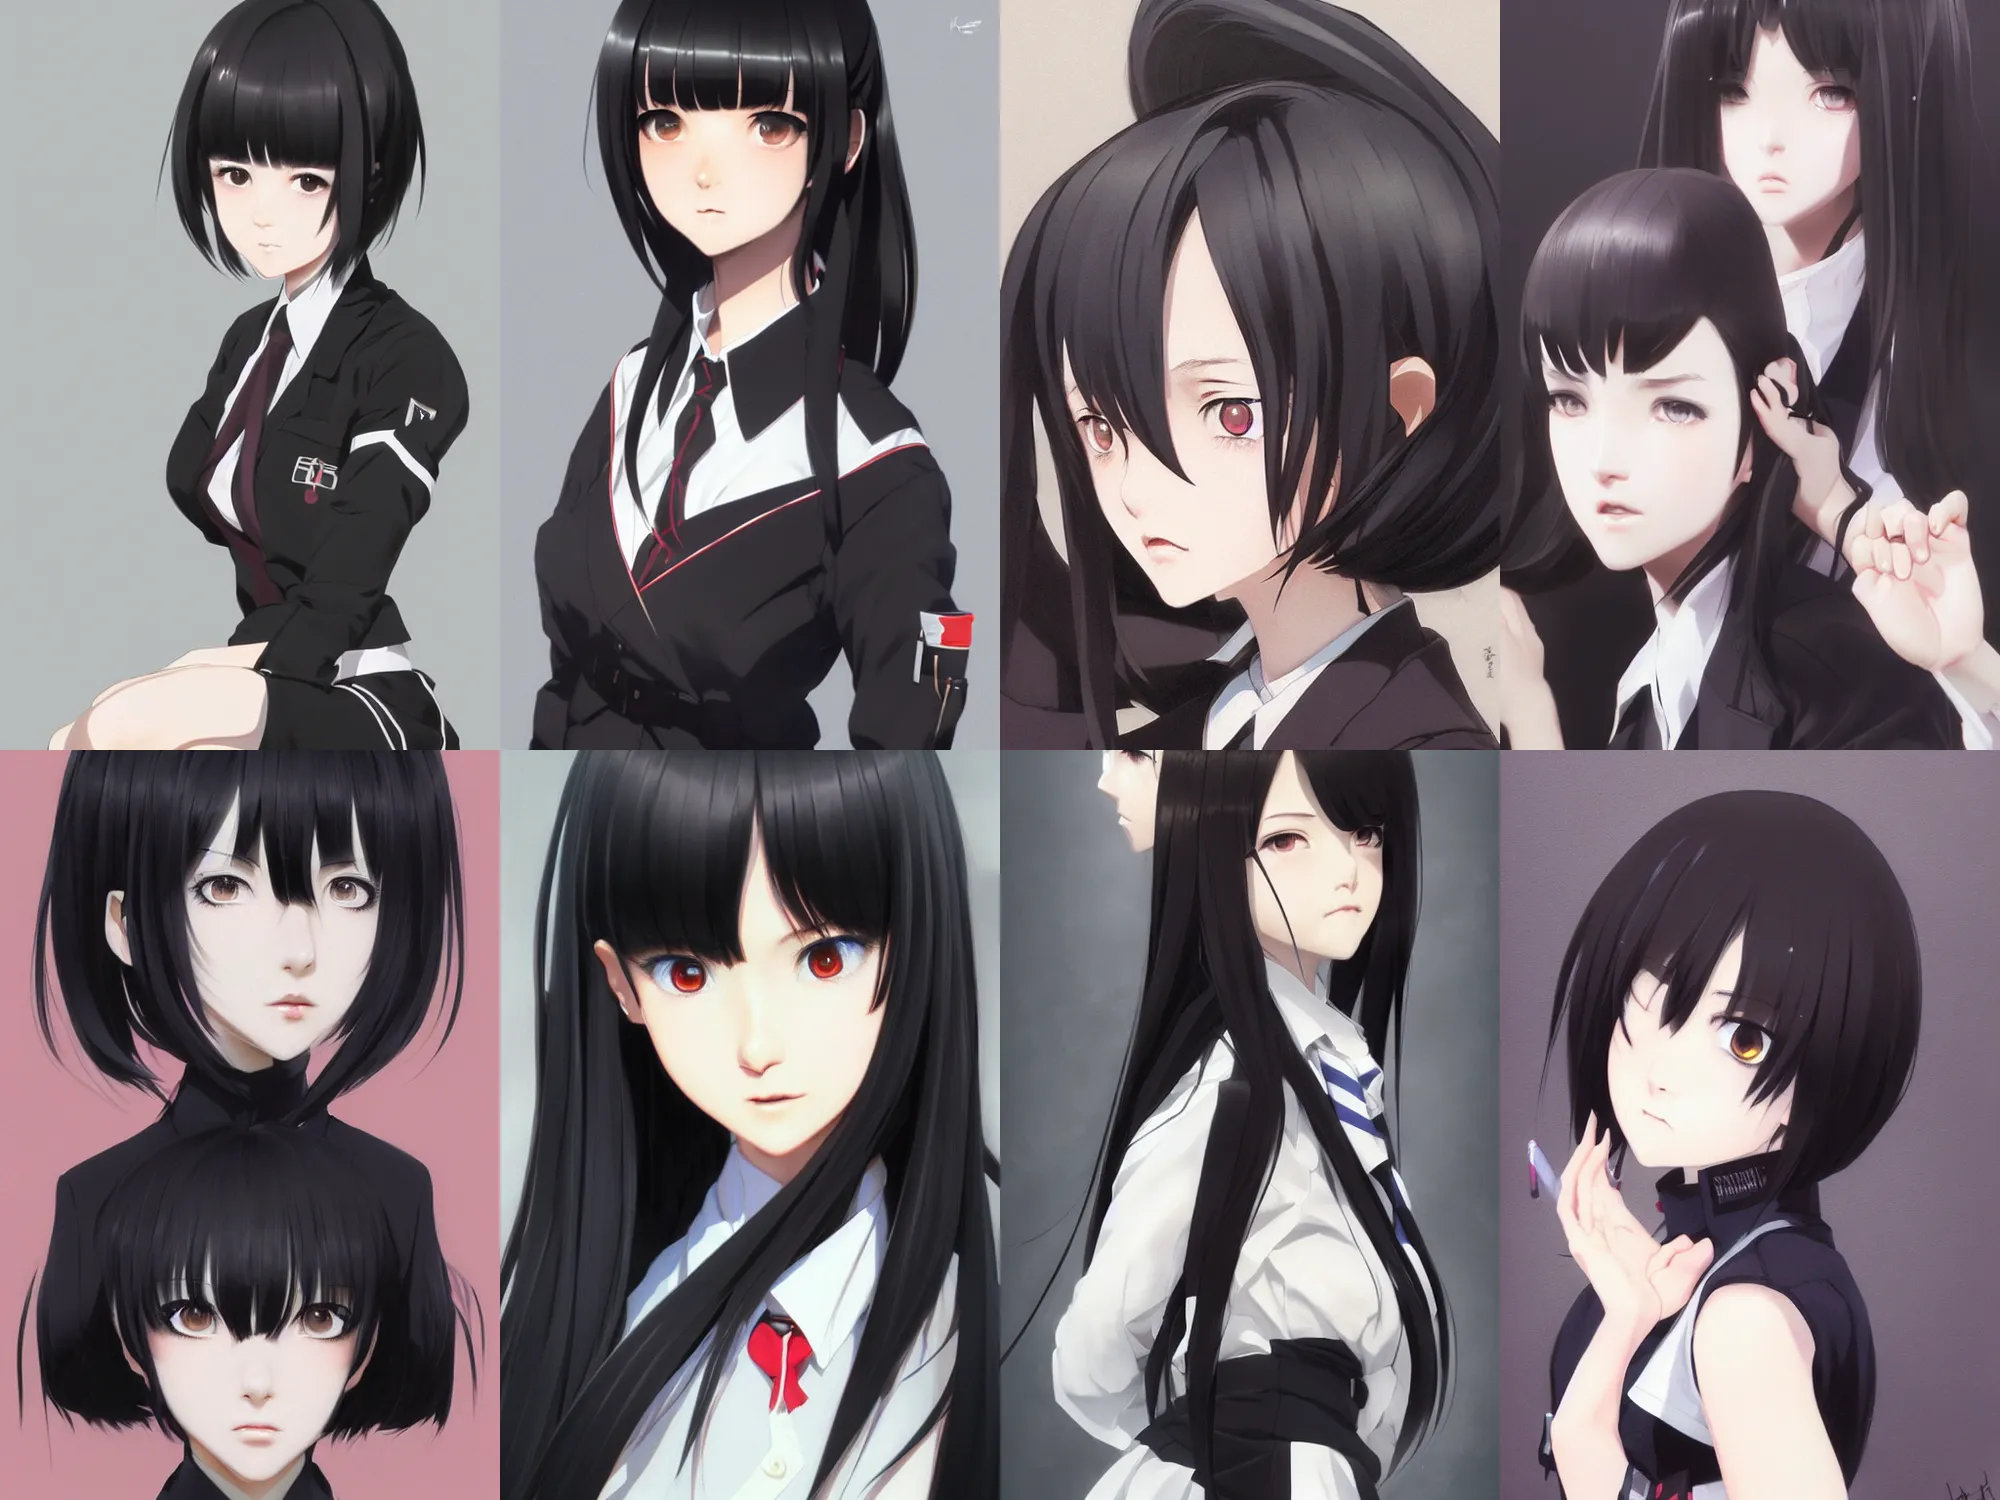 Prompt: Gorgeous japanese schoolgirl with black hair, in black uniform, very detailed eyes. By (ilya kuvshinov), krenz cushart, Greg Rutkowski, trending on artstation